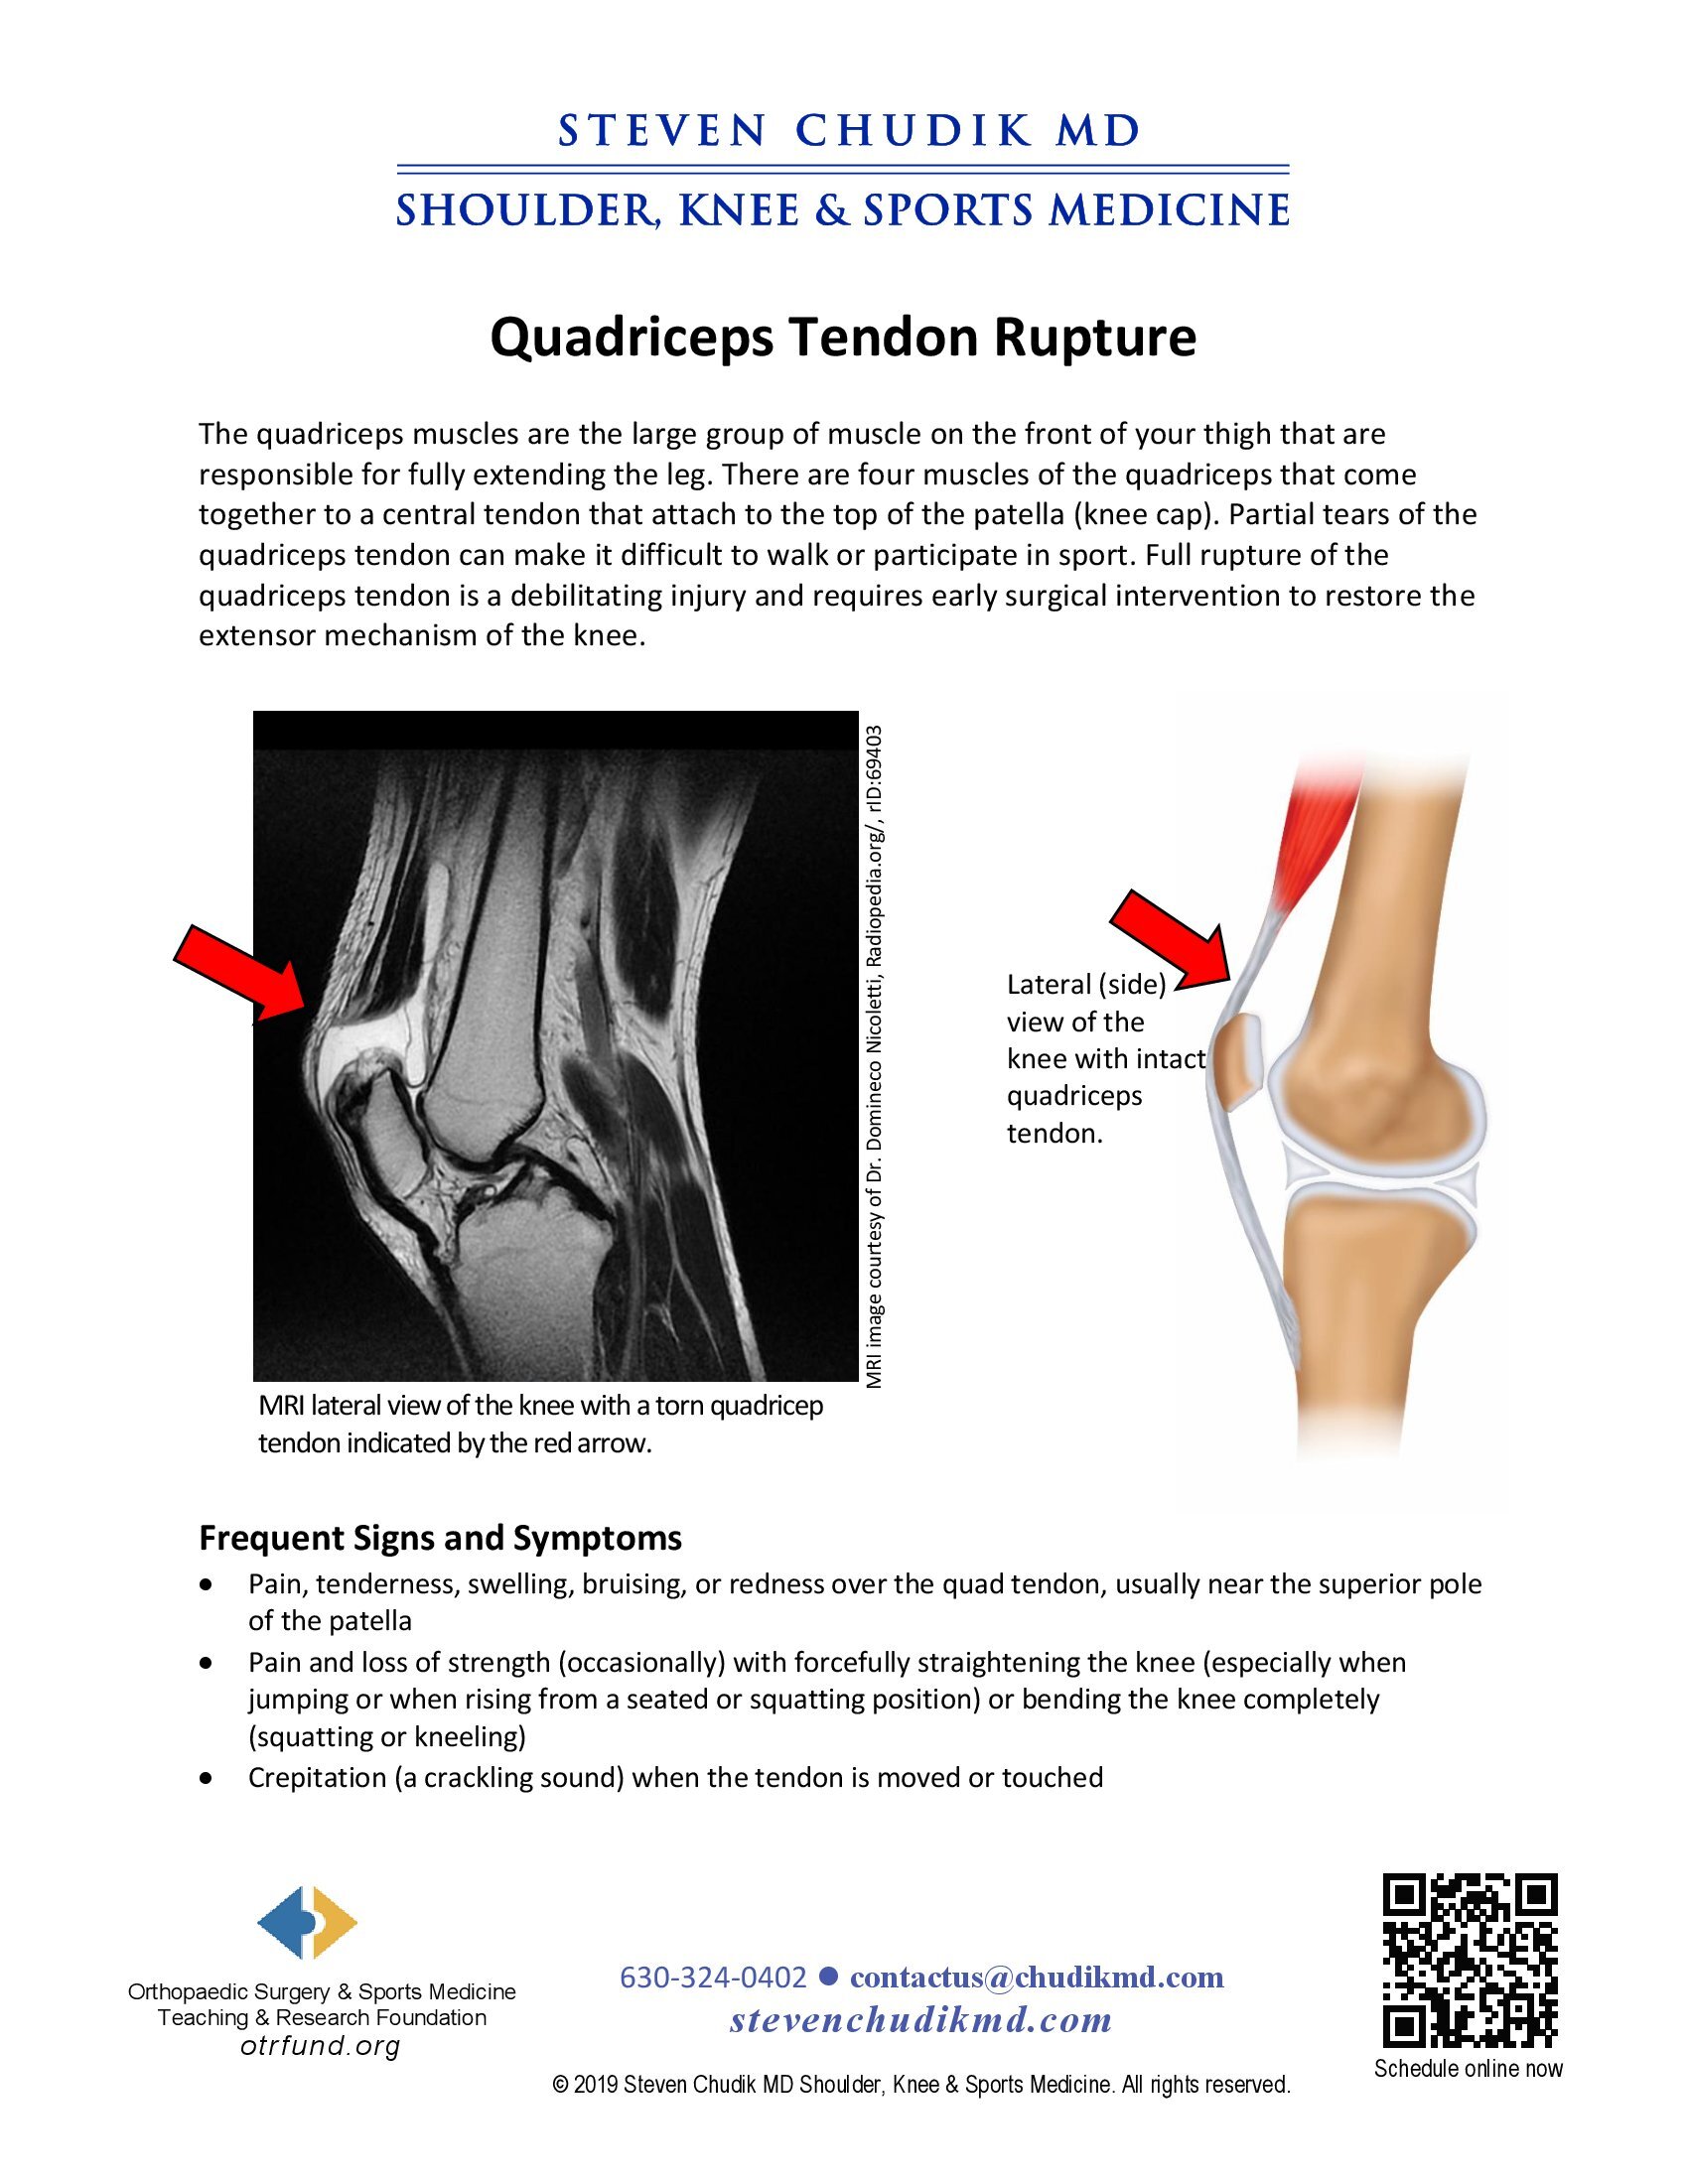 Quadriceps Tendon Rupture - Steven Chudik MD